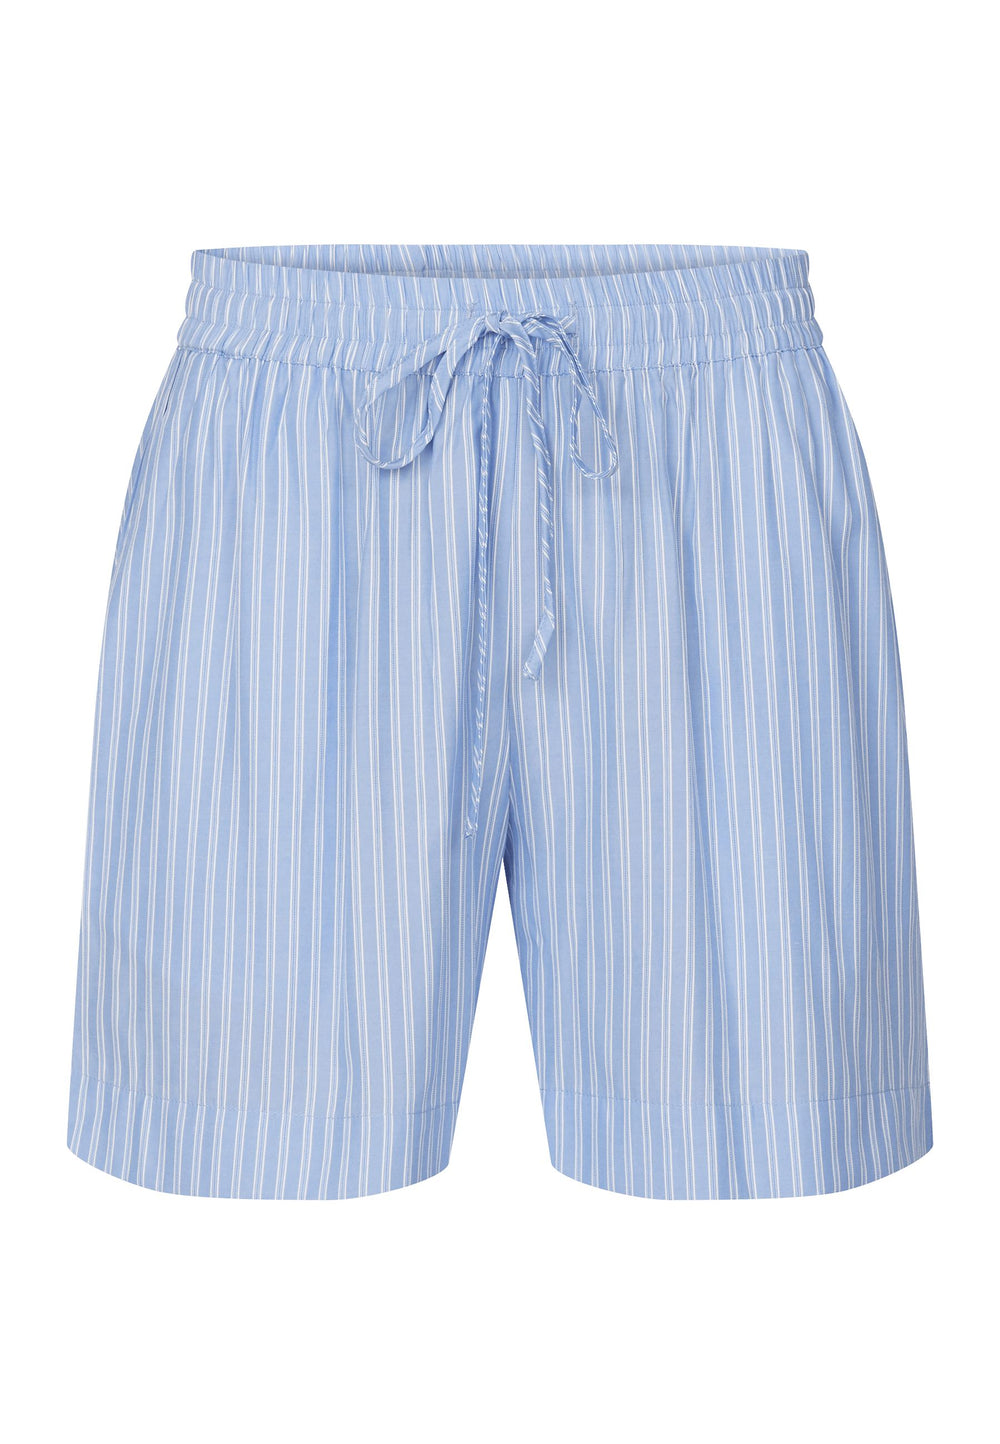 Sisters Point - Ella-Sho11 - 833 Blue Stripe Shorts 